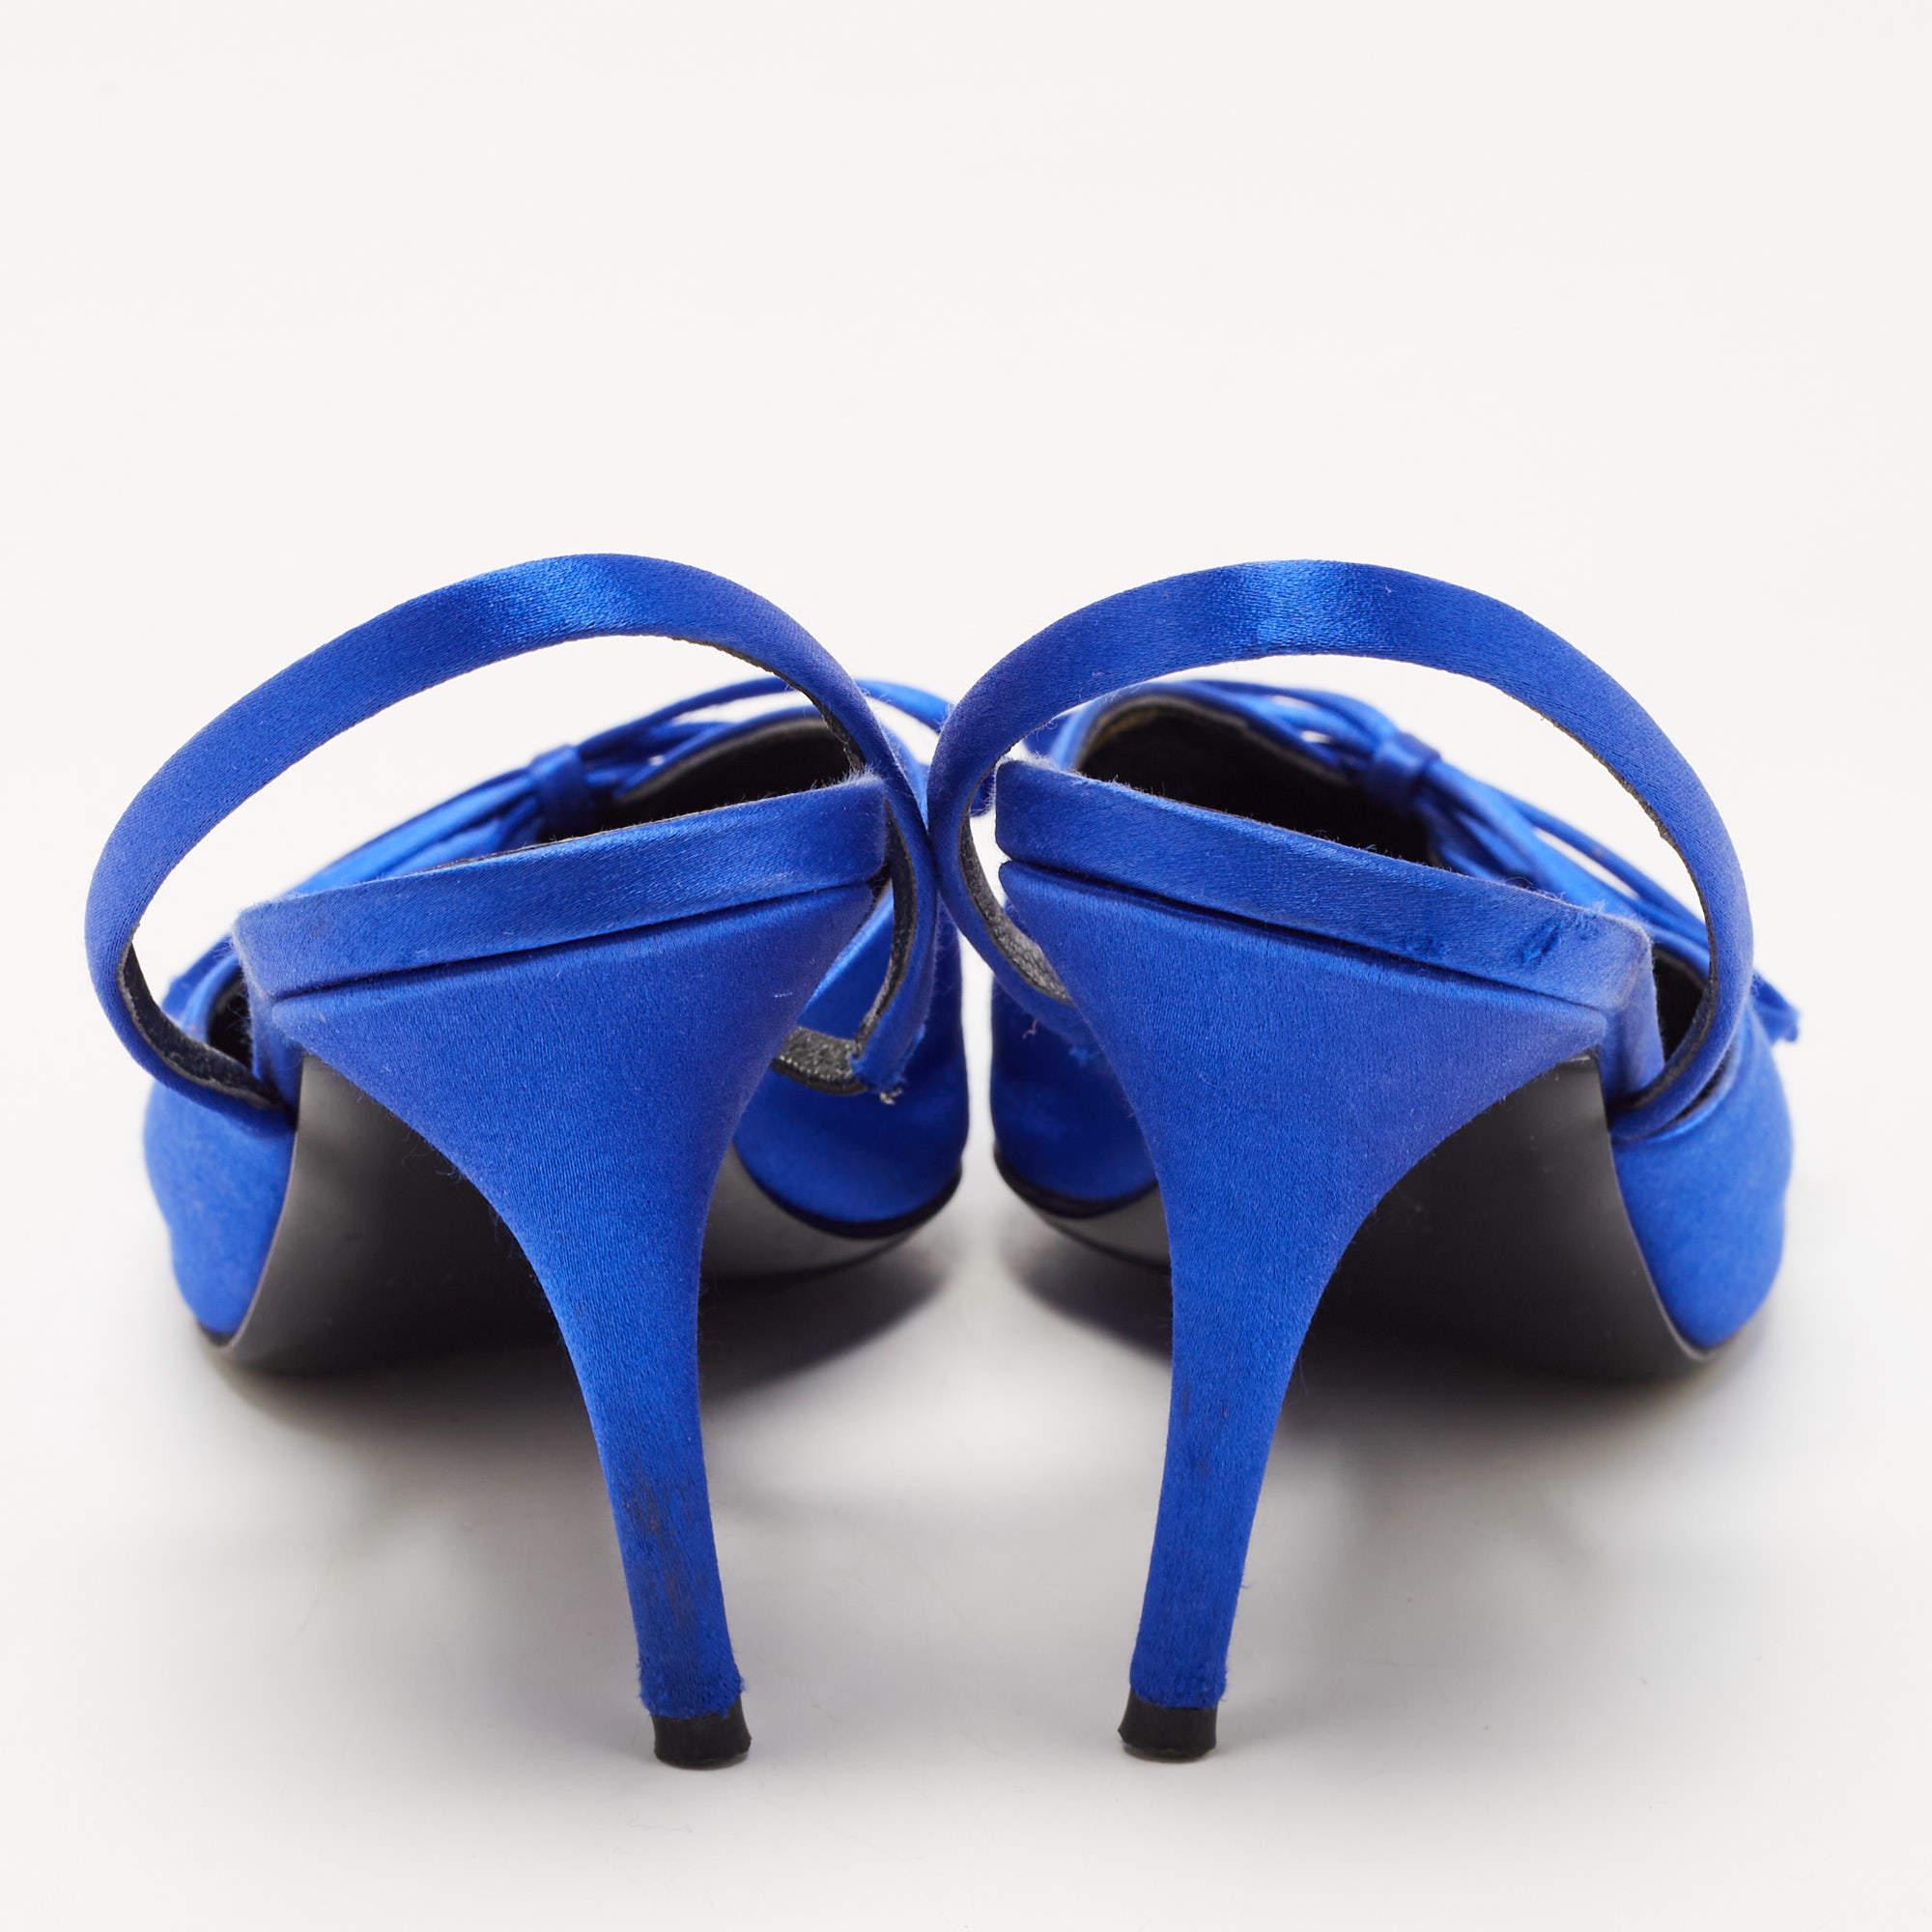 cobalt blue slingback shoes